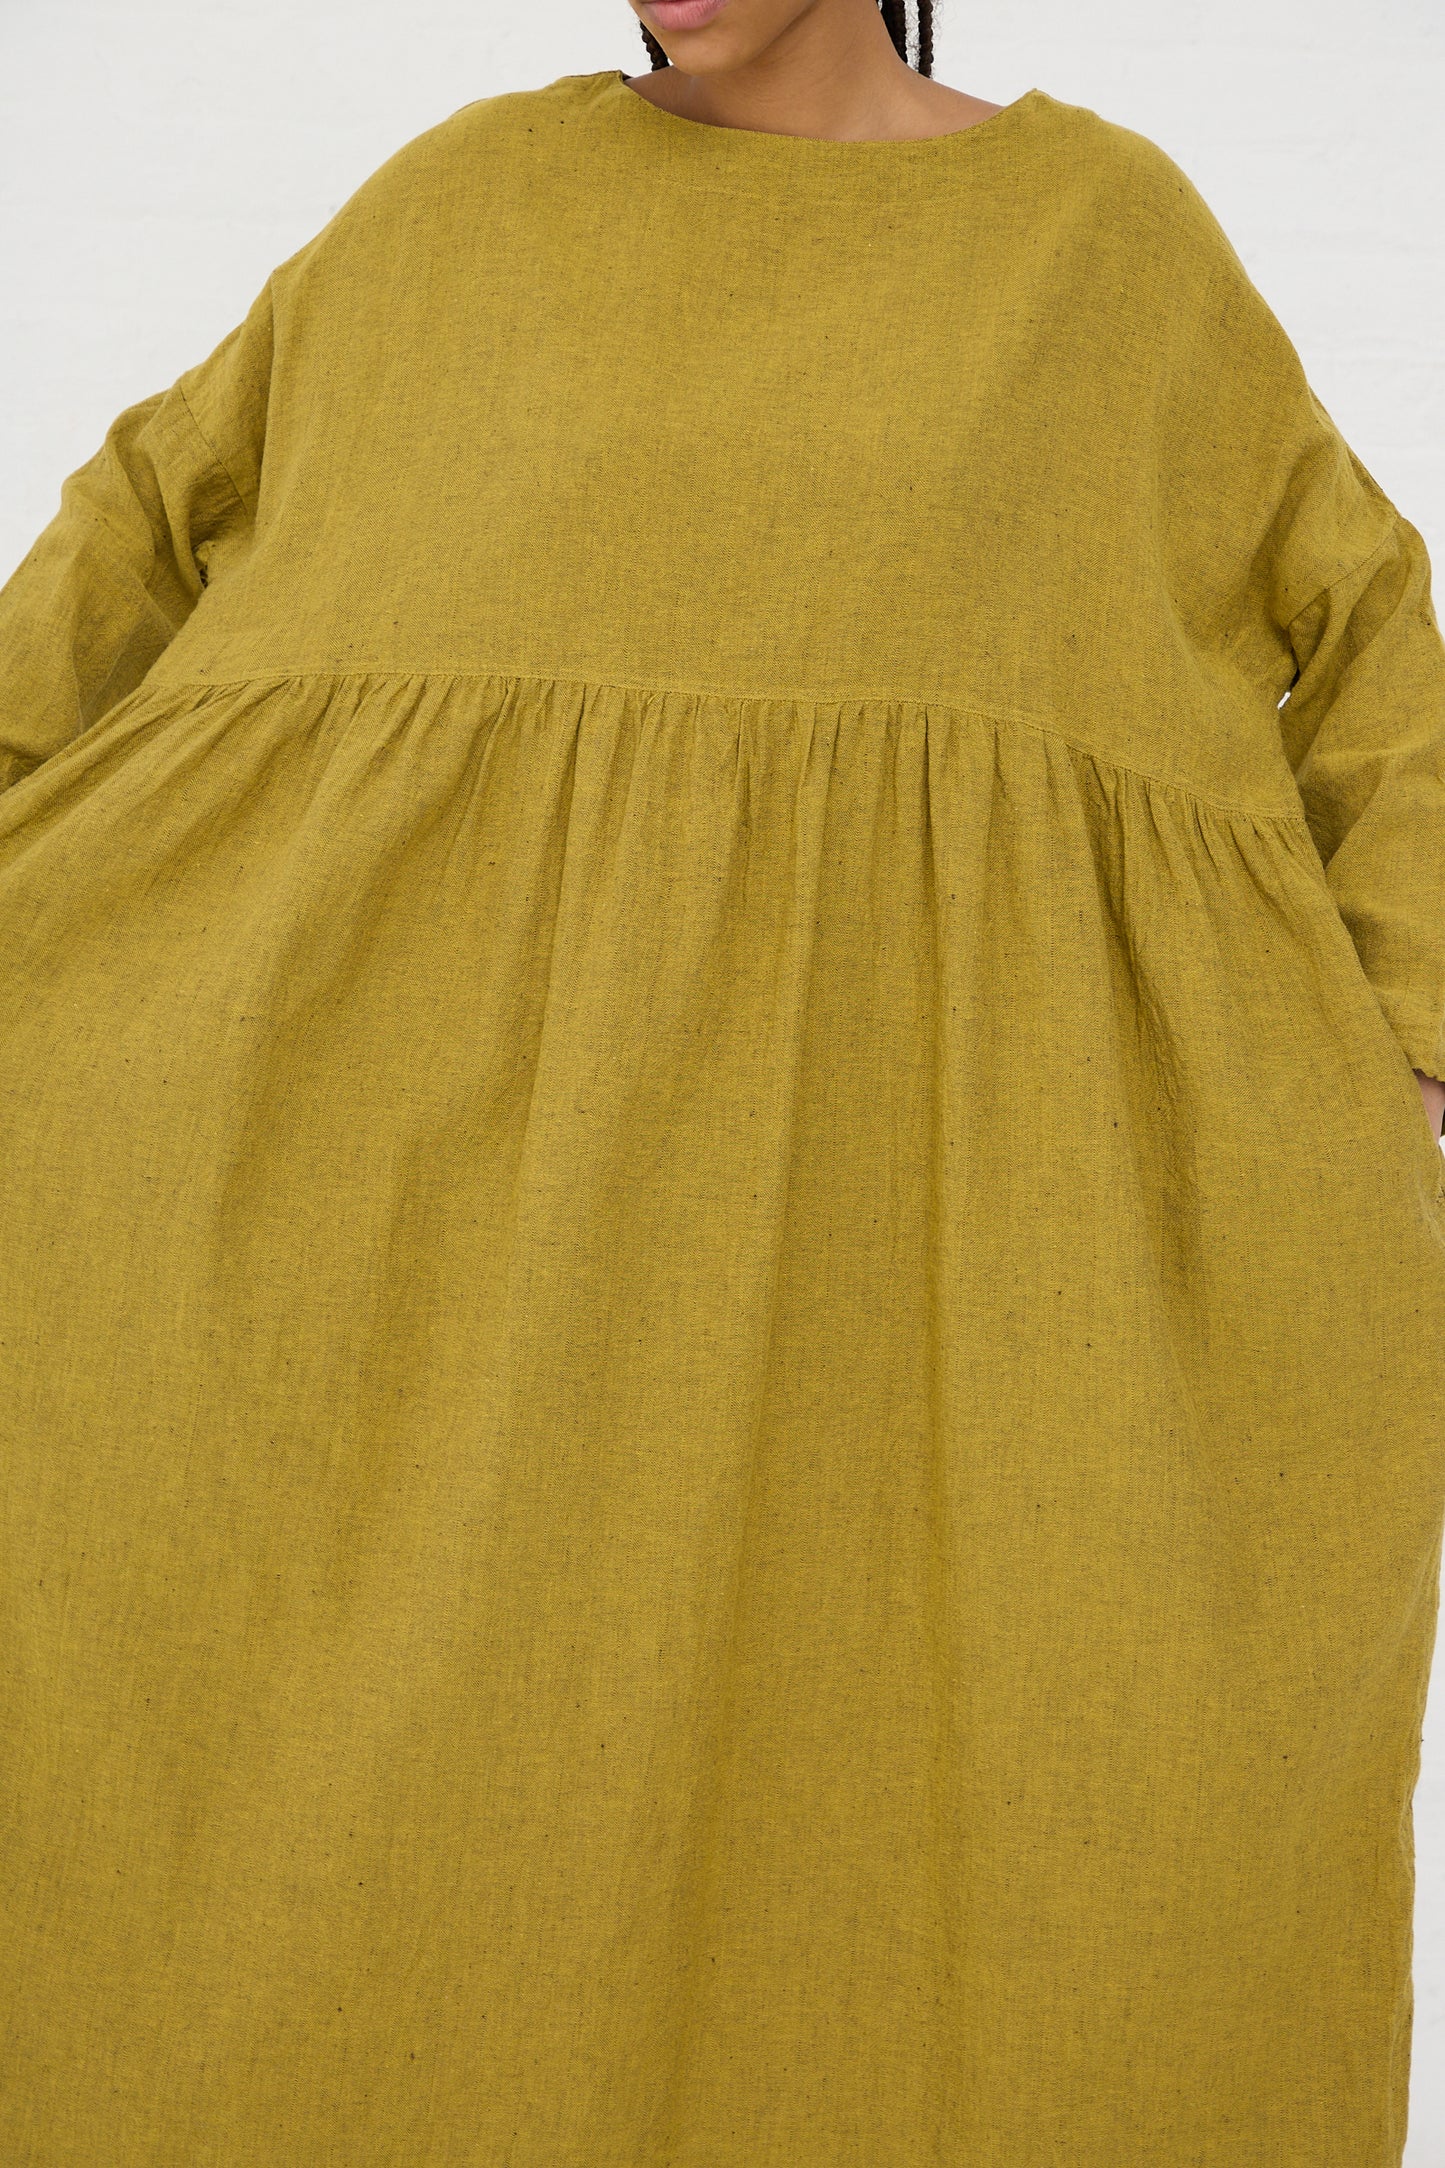 Woman wearing an oversized yellow linen cotton herringbone dress with gathered waist detail by Ichi Antiquités.